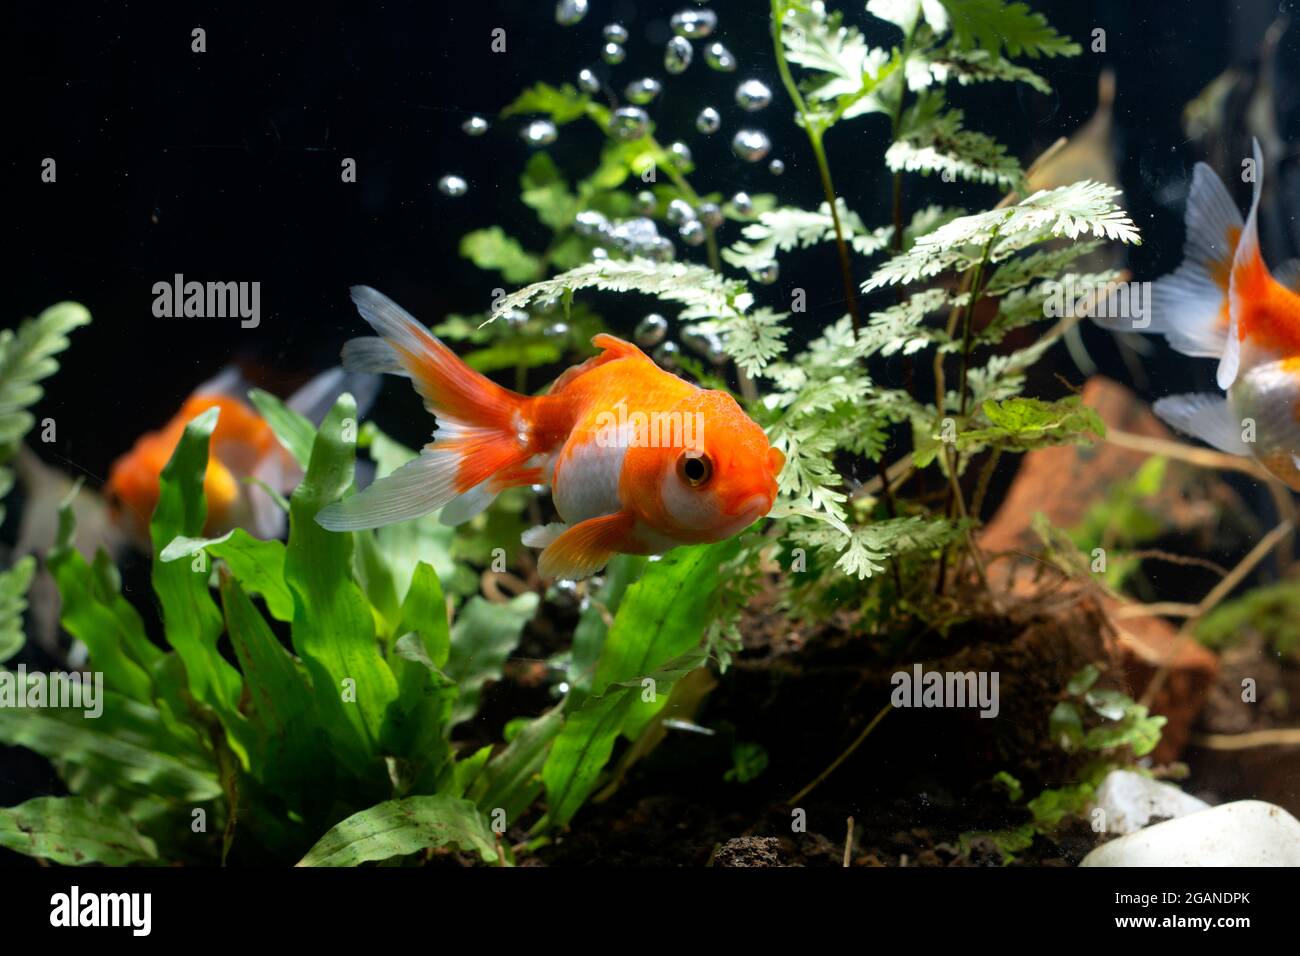 Goldfish in aquarium with green plants Stock Photo